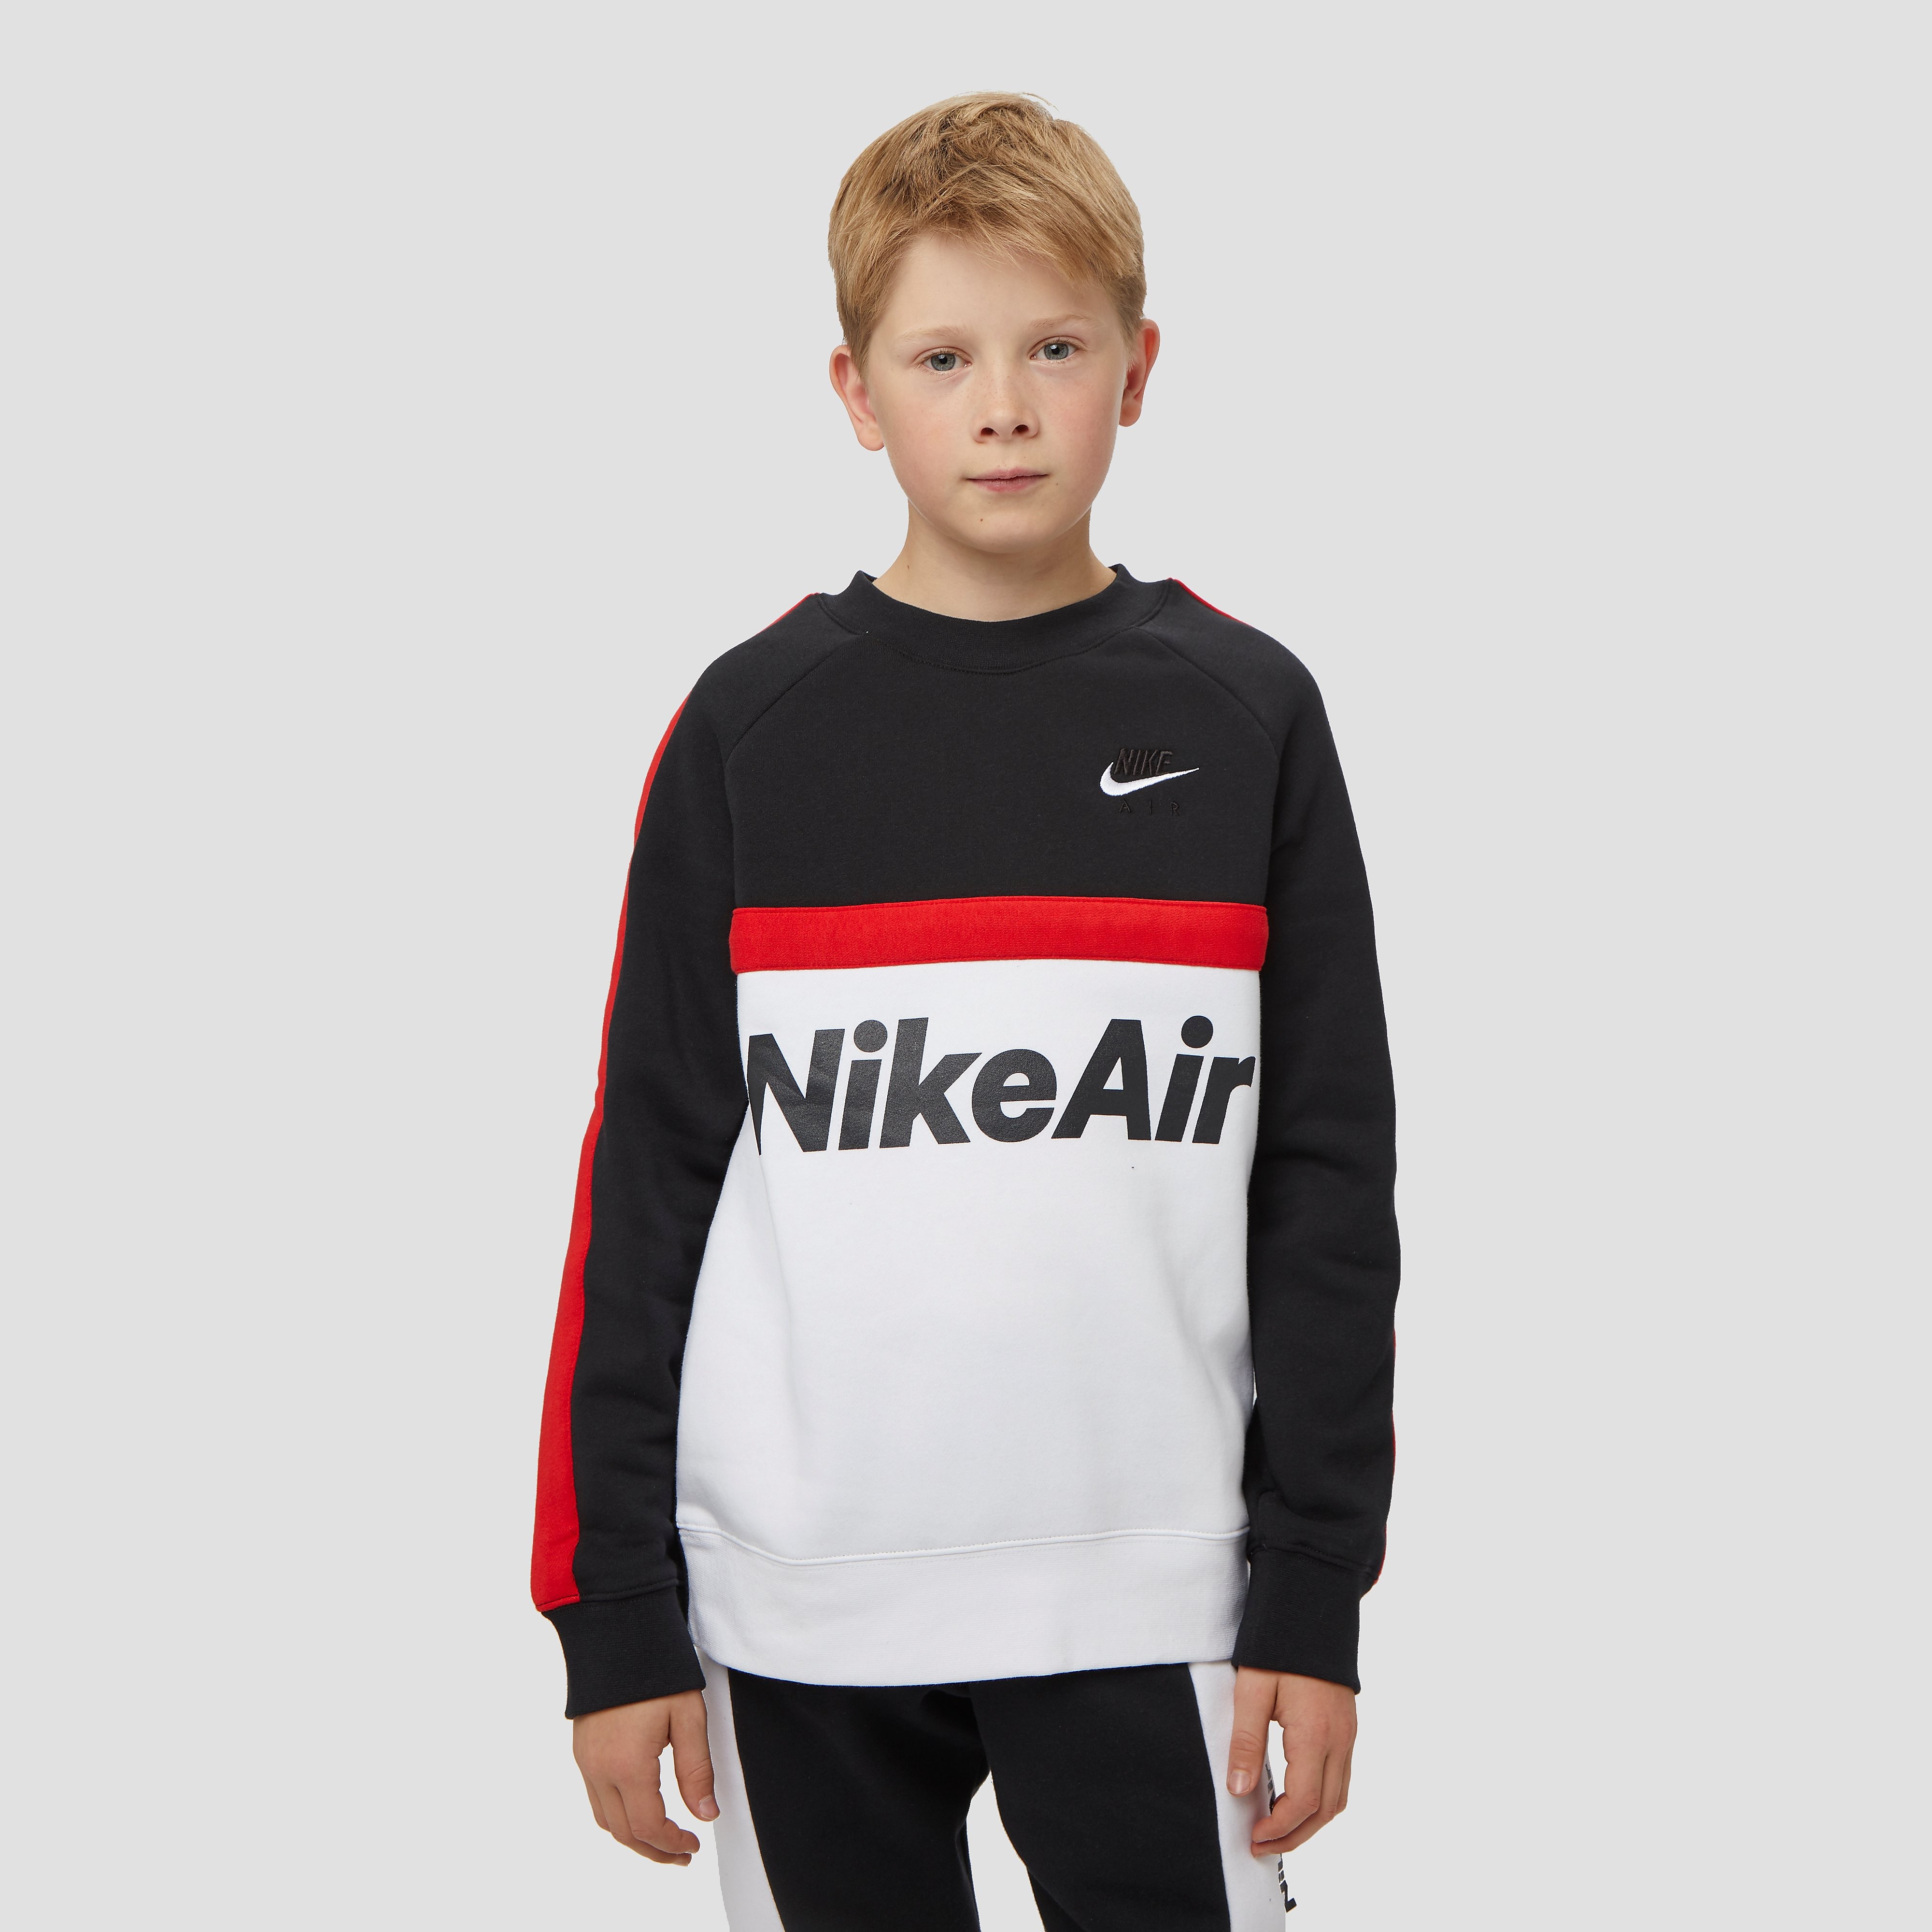 NIKE Sportswear air crew sweater rood/zwart kinderen Kinderen